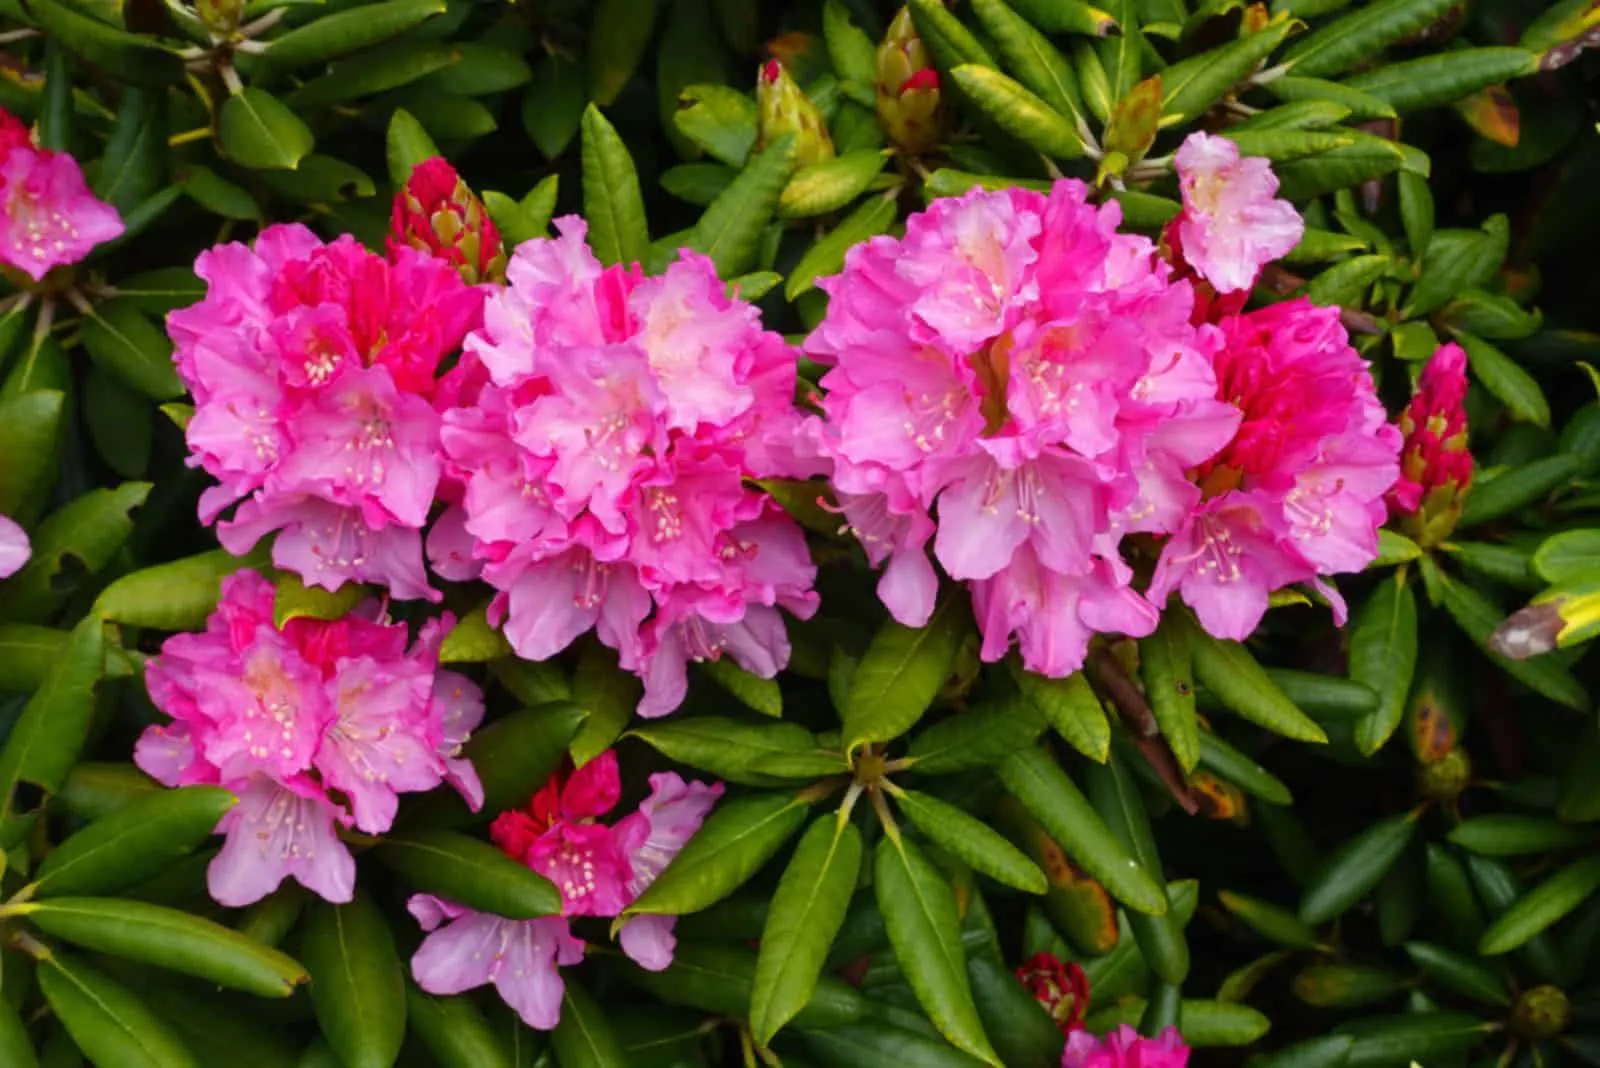 beautiful blooming rhododendron or azalea flowers